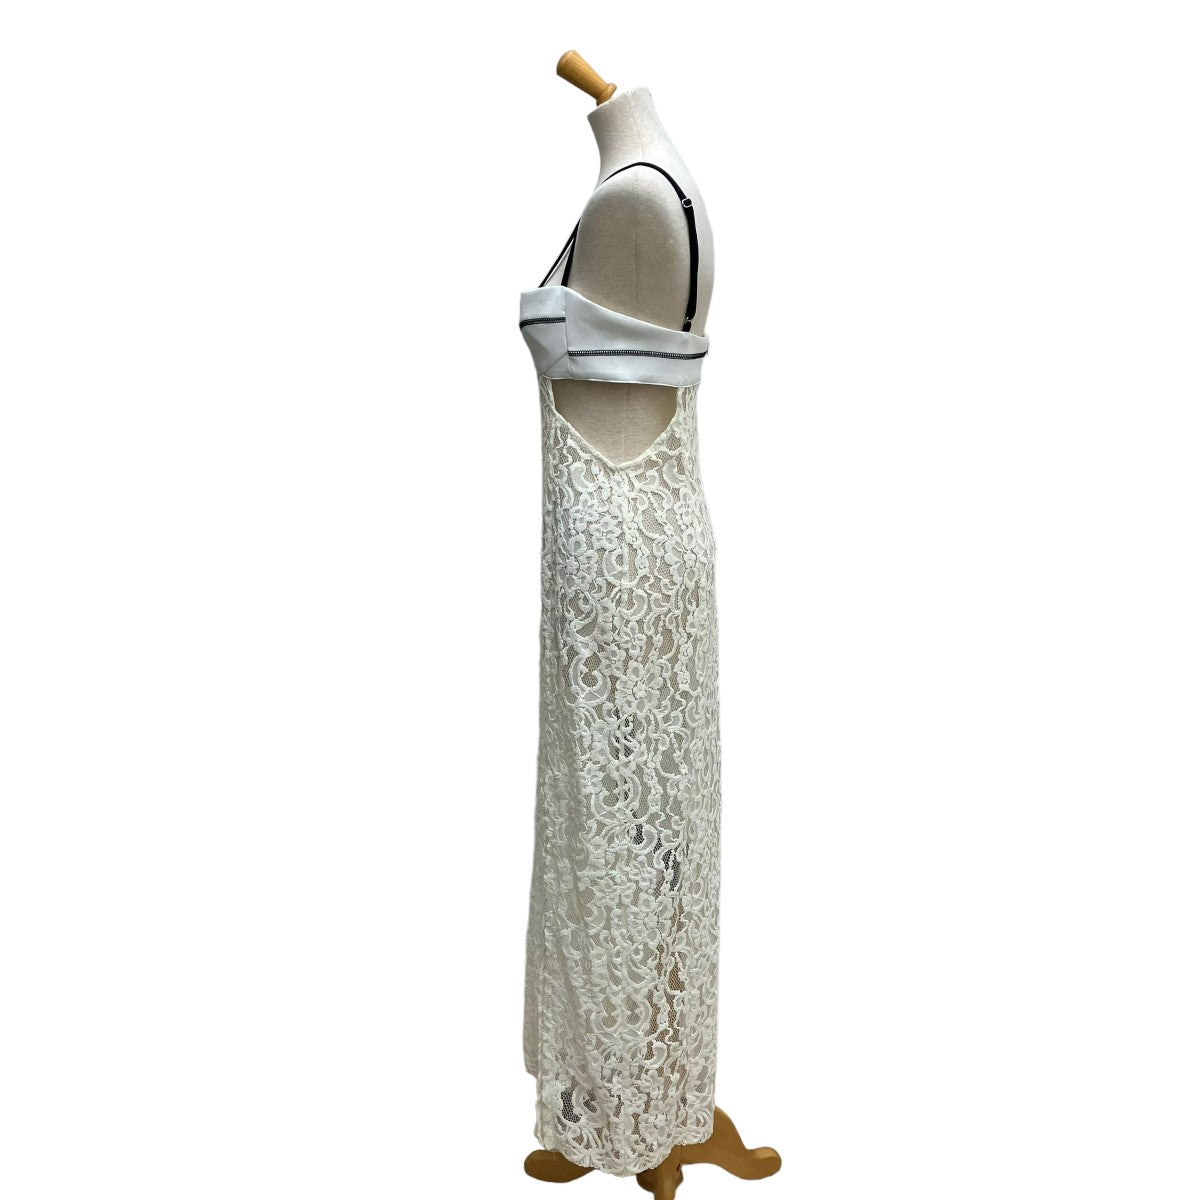 PRANK PROJECT(プランクプロジェクト) Scuba-Jersey Lace Dress　ワンピース31231265403